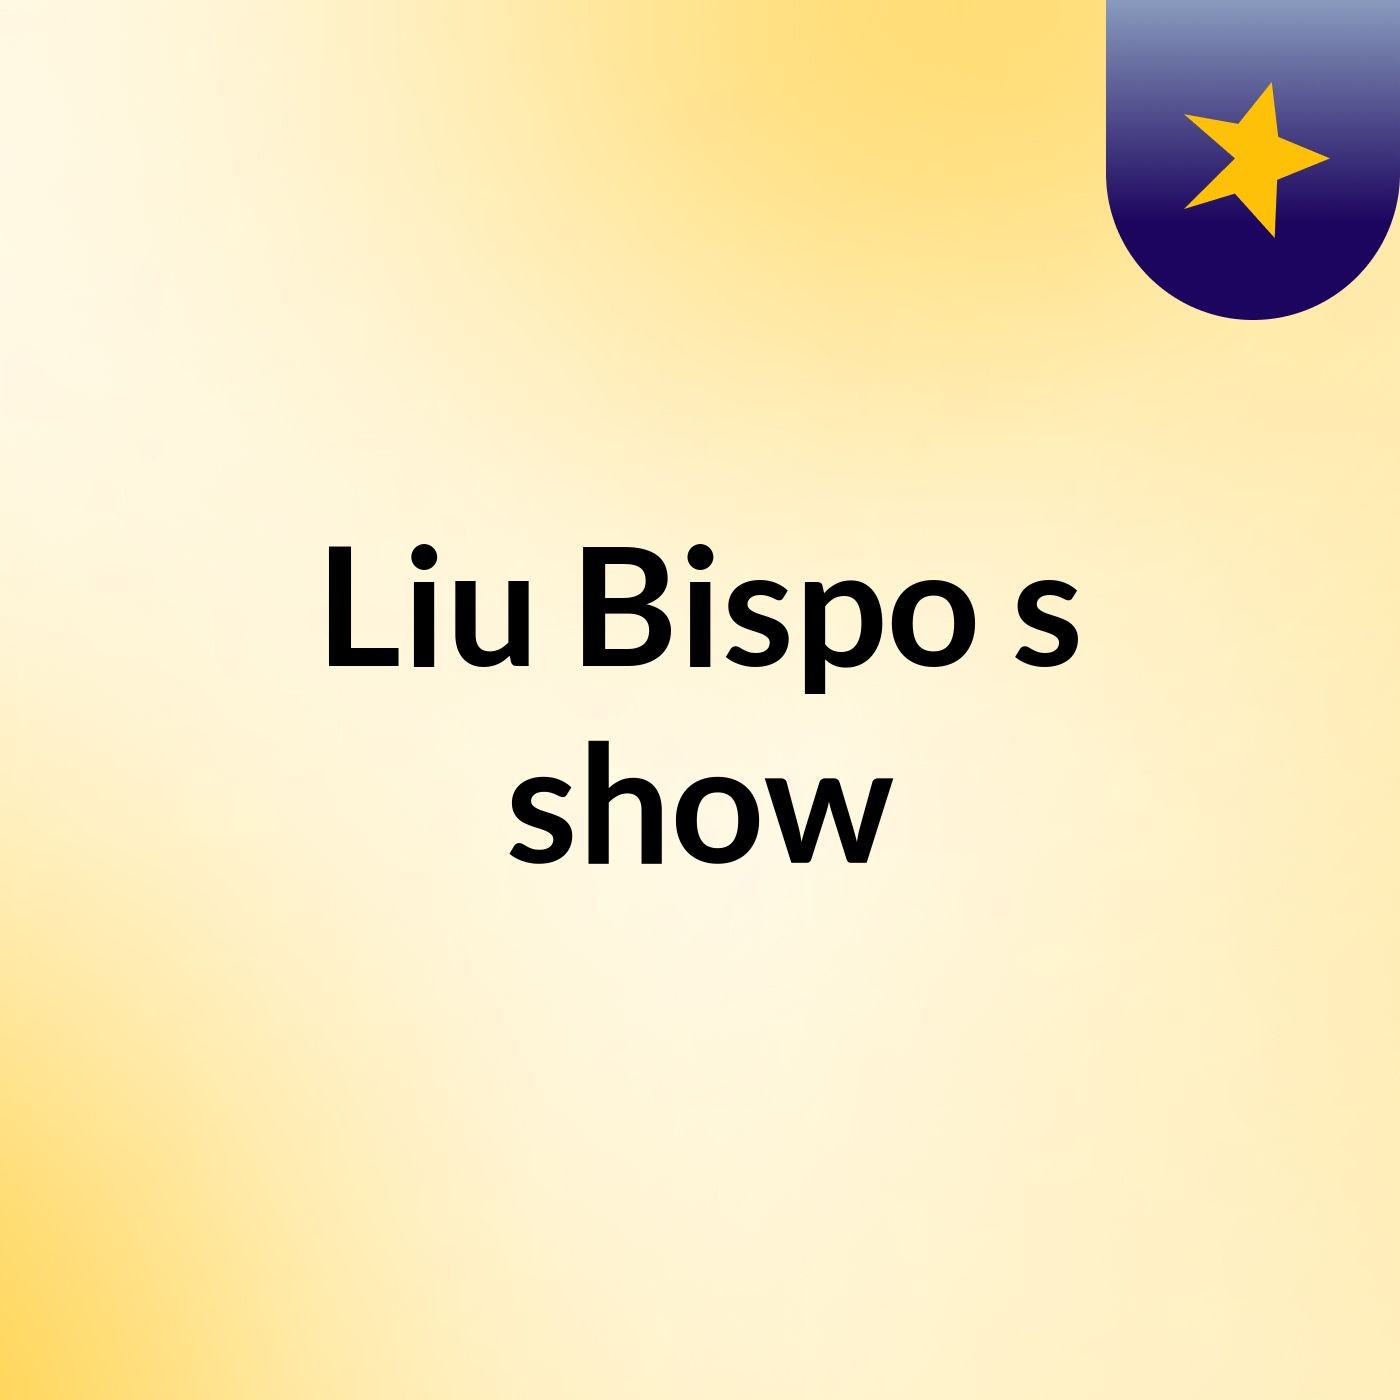 Liu Bispo's show